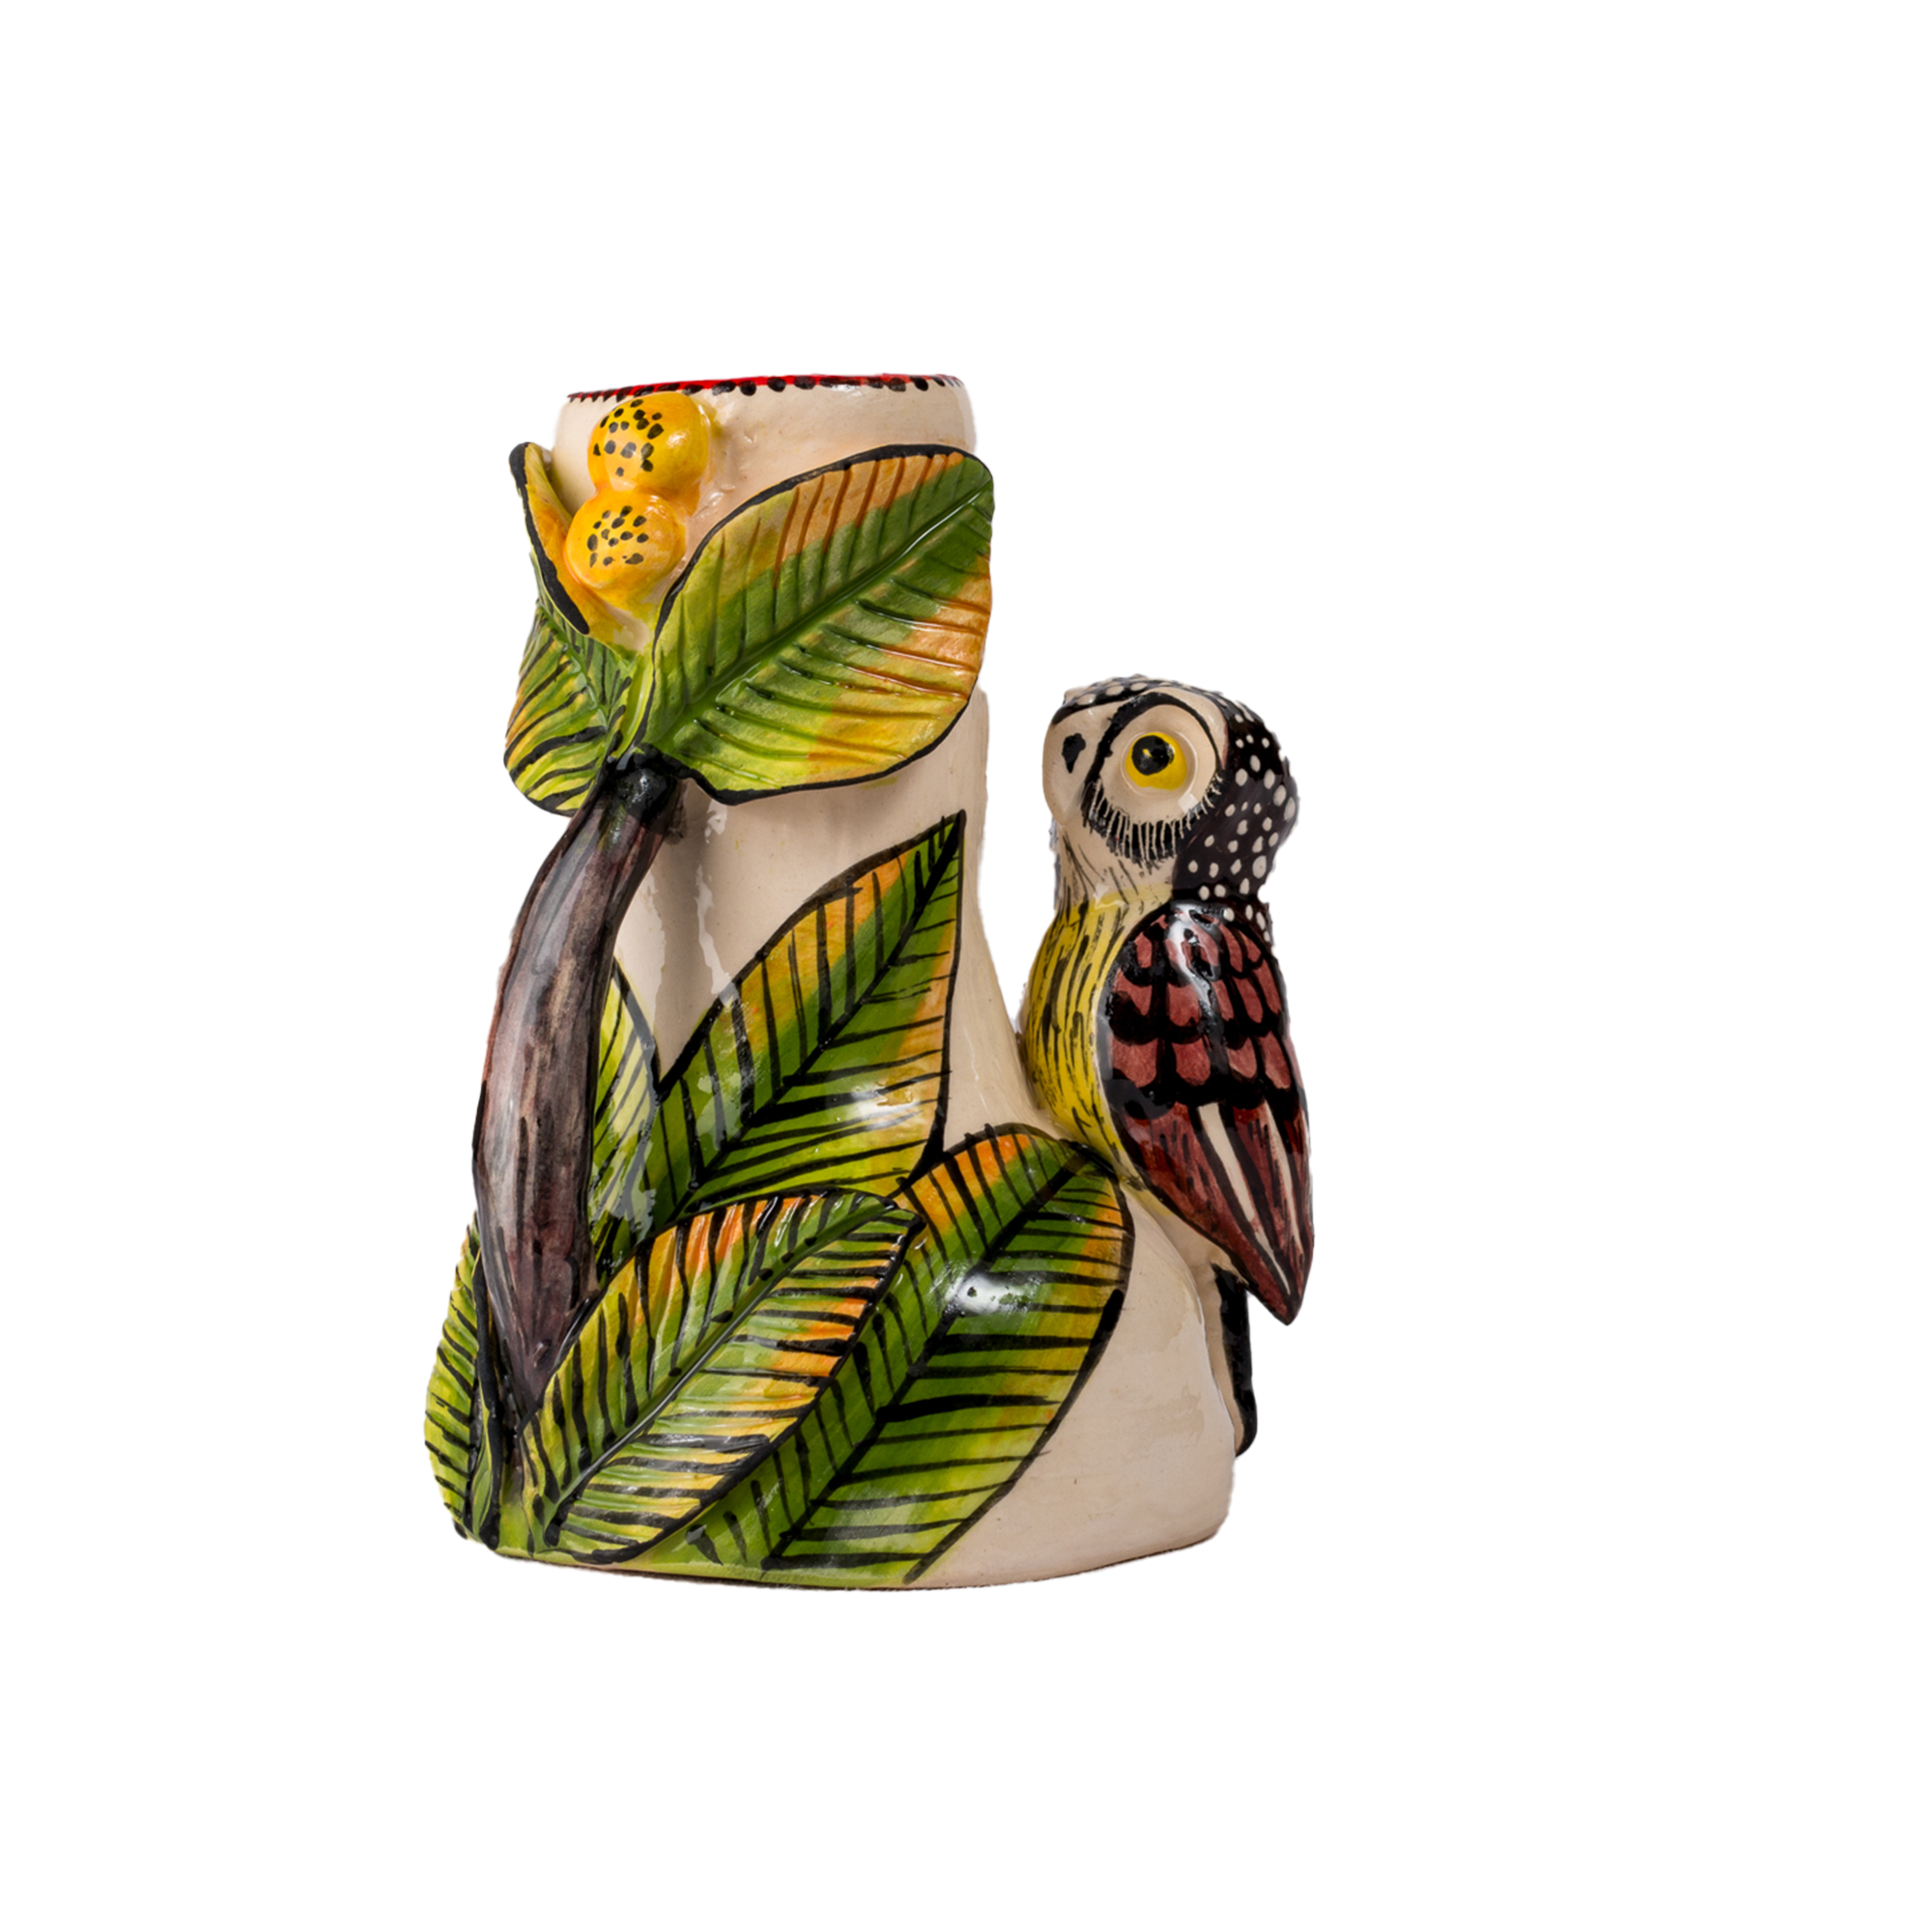 3D Ceramic Owl Candle Holder